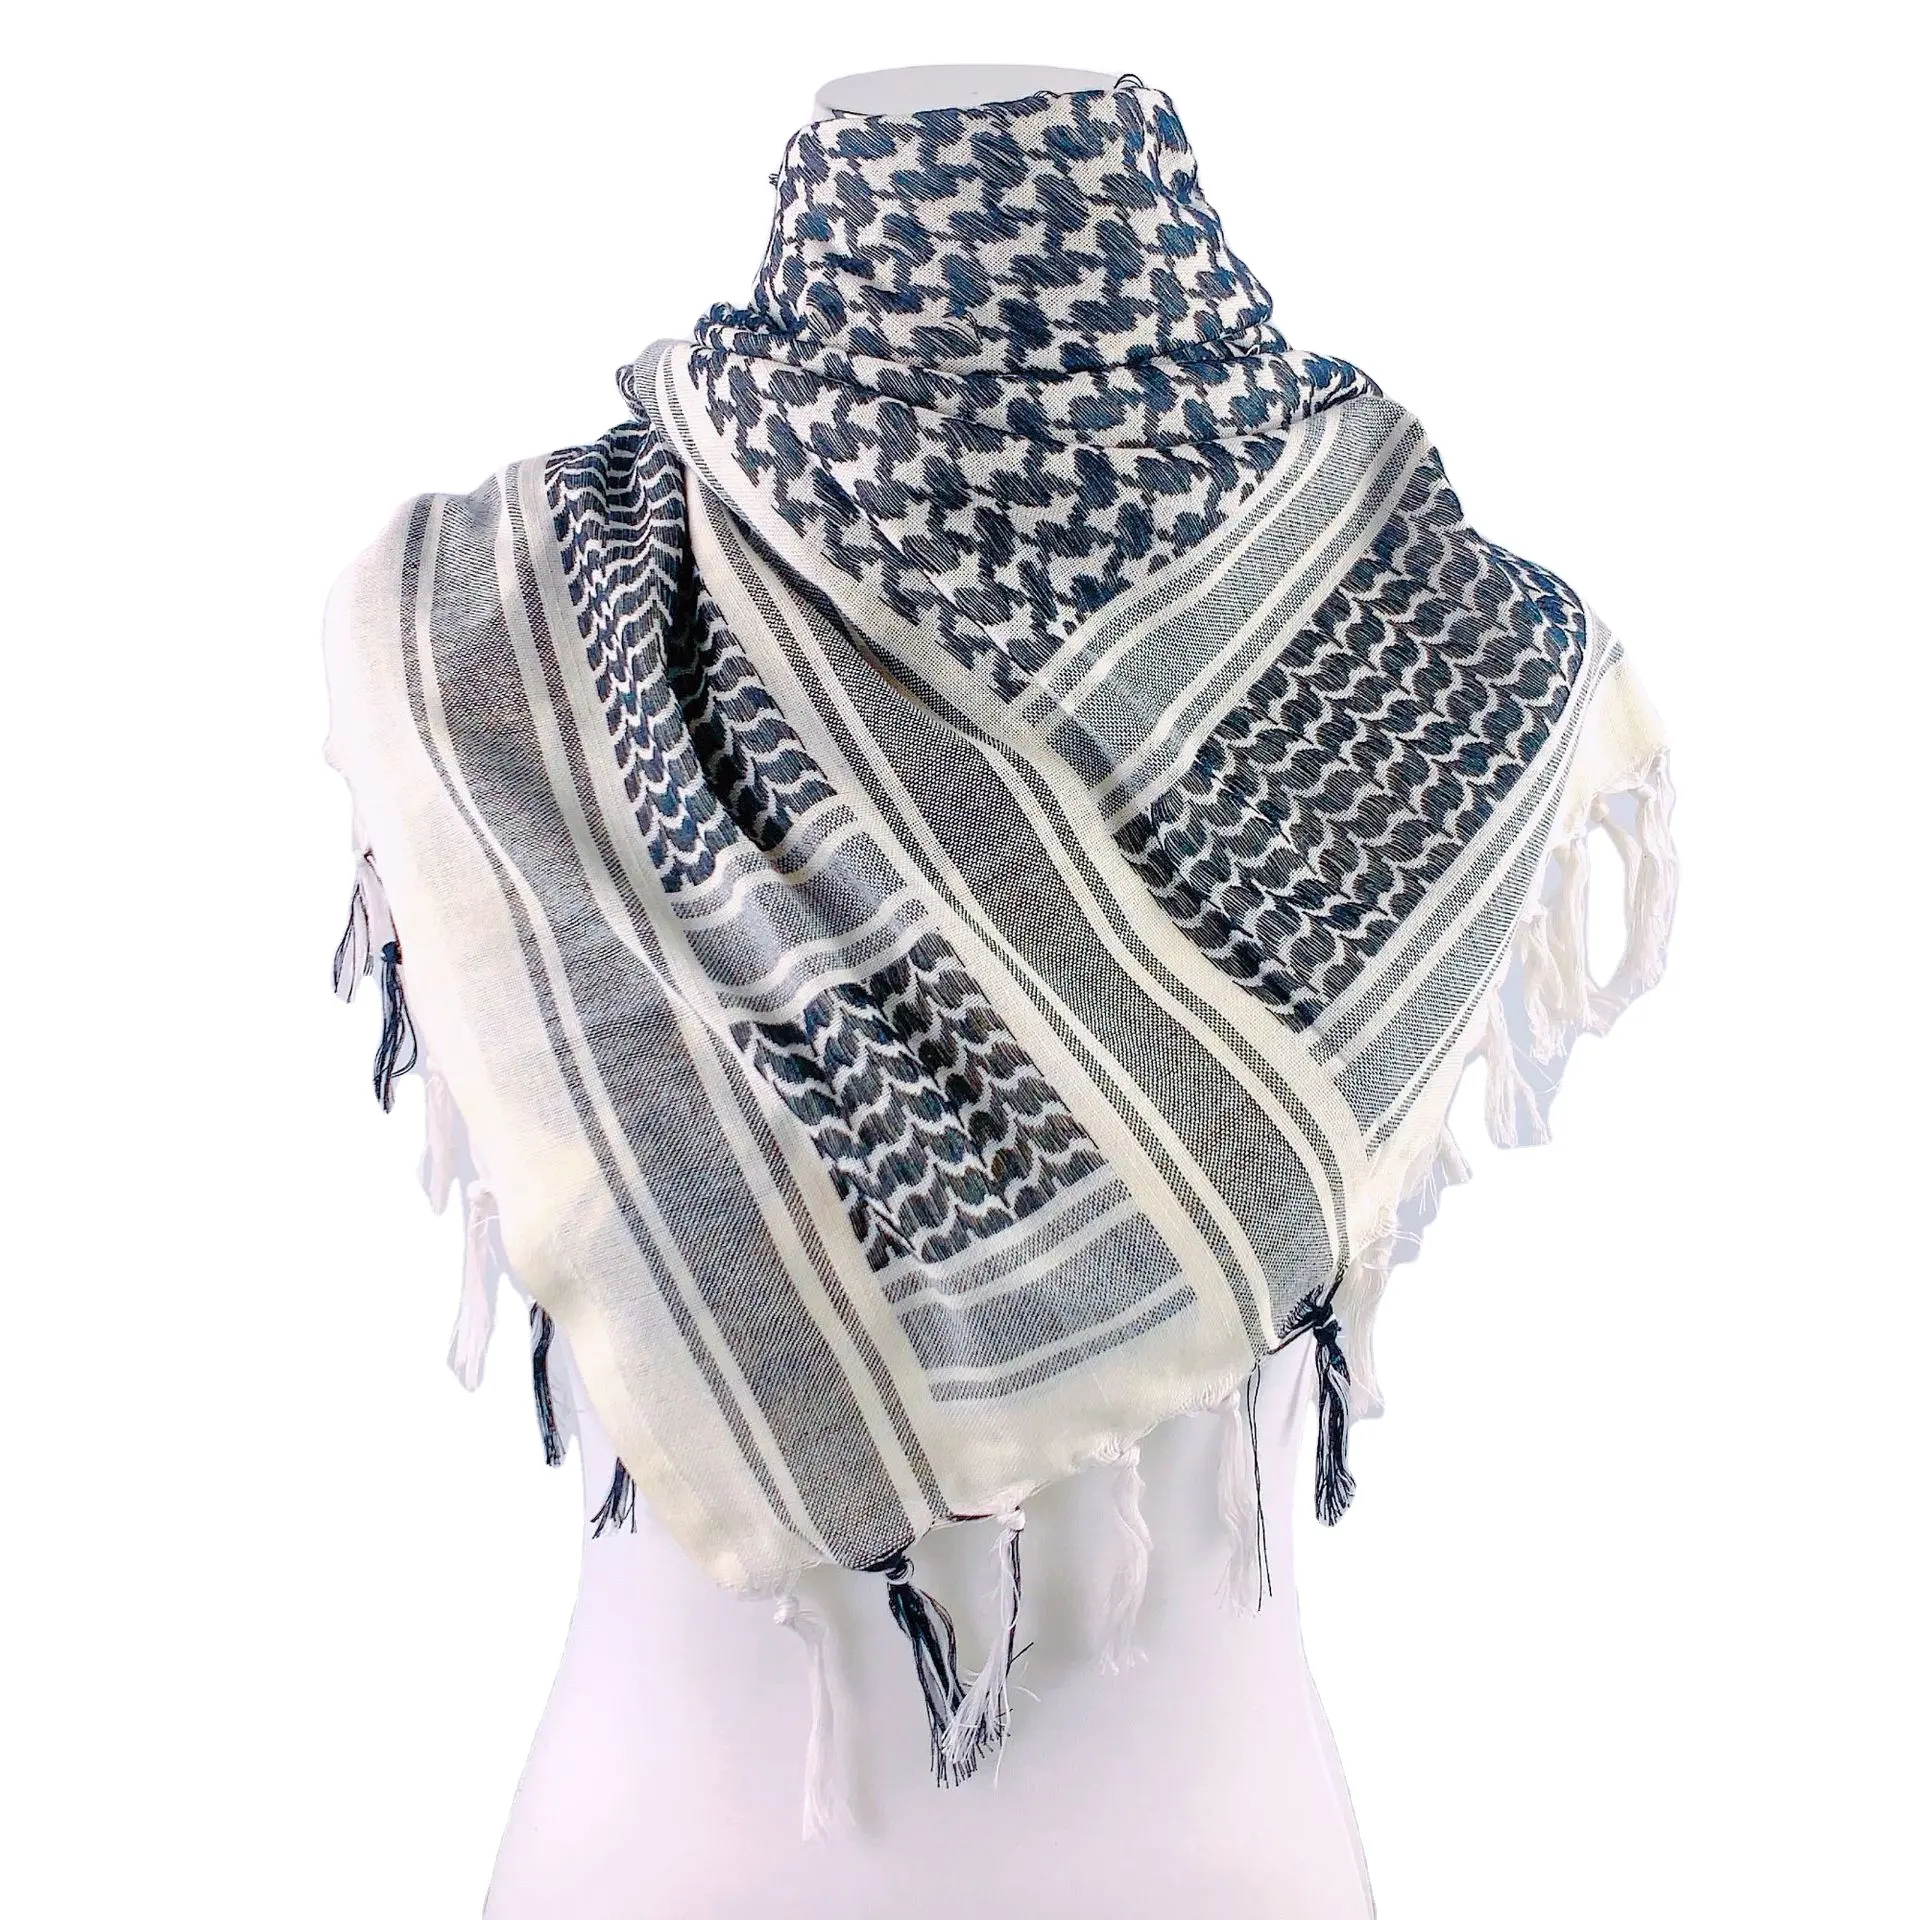 10 couleurs Shemagh Palestine Keffieh écharpe arabe noir sur blanc Kufiya Arafat Hatta Original marque coton unisexe écharpe